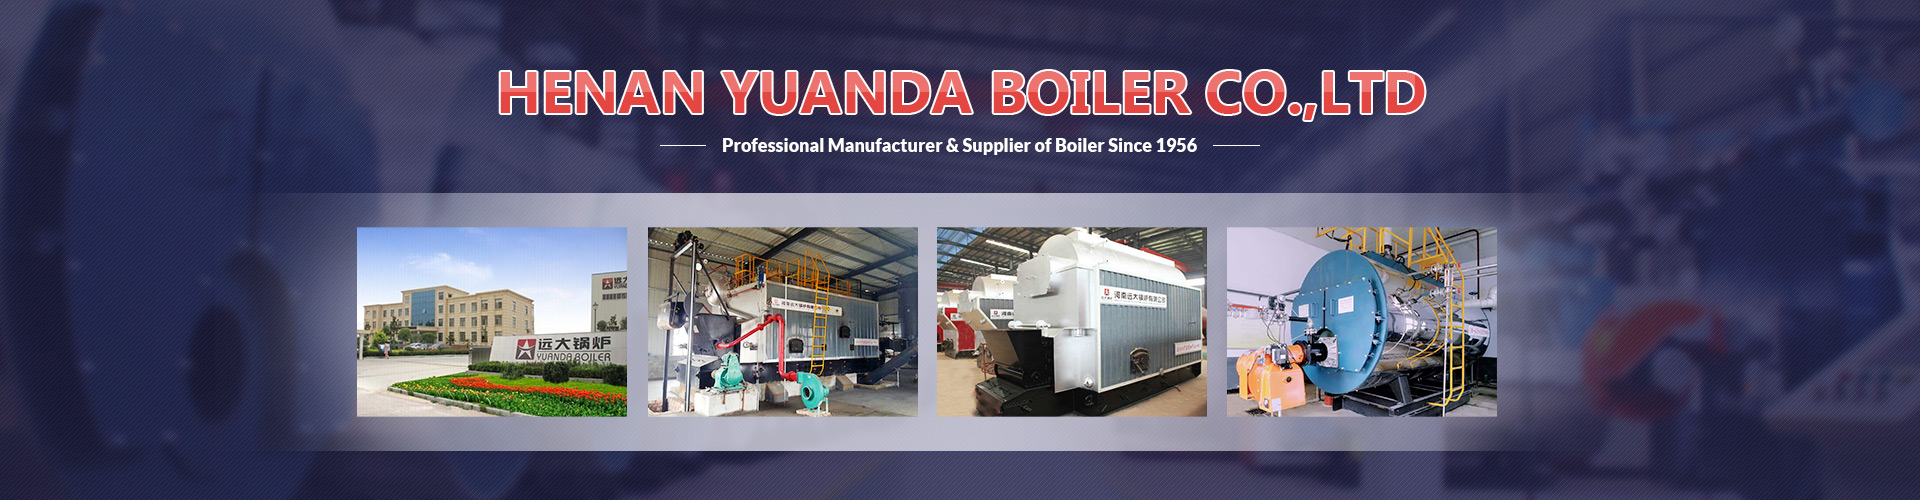 Henan Yuanda Boiler Corporation Ltd.,